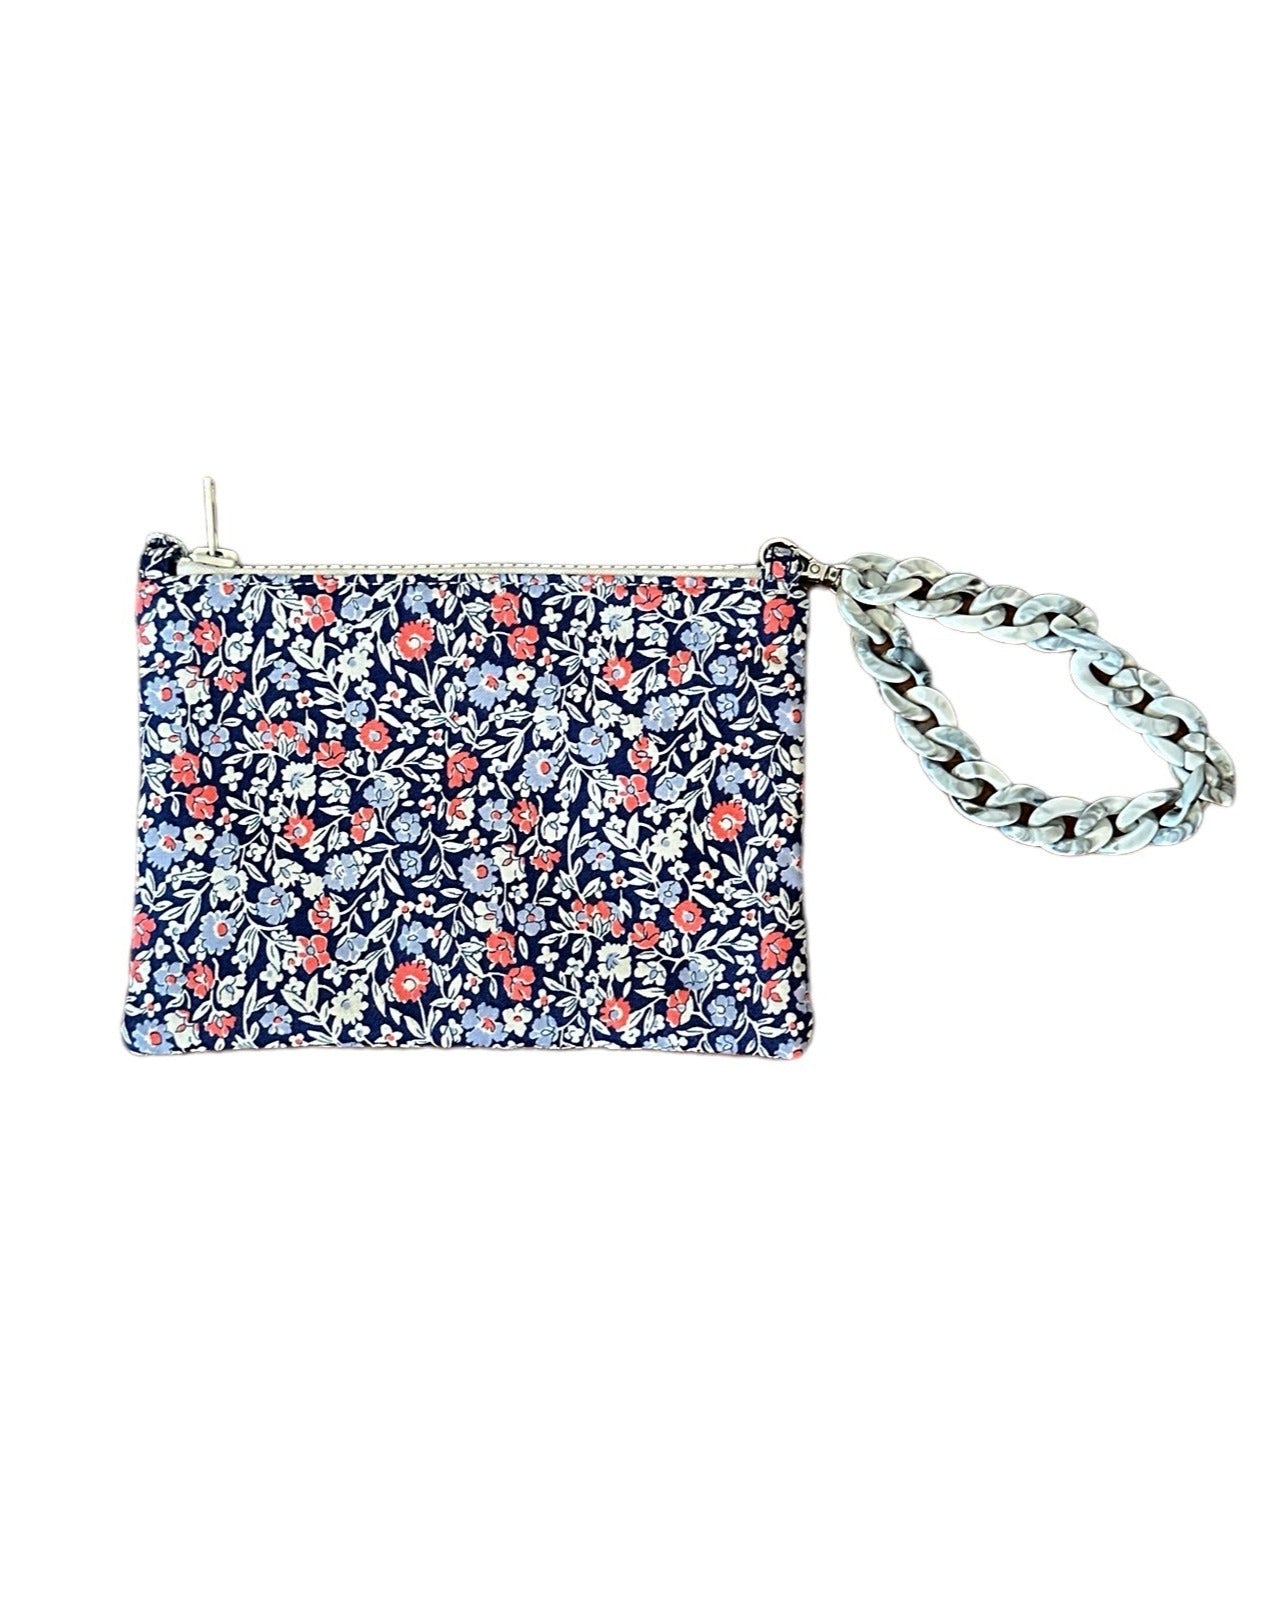 Liberty of London Blue Floral Wristlet pouch. 